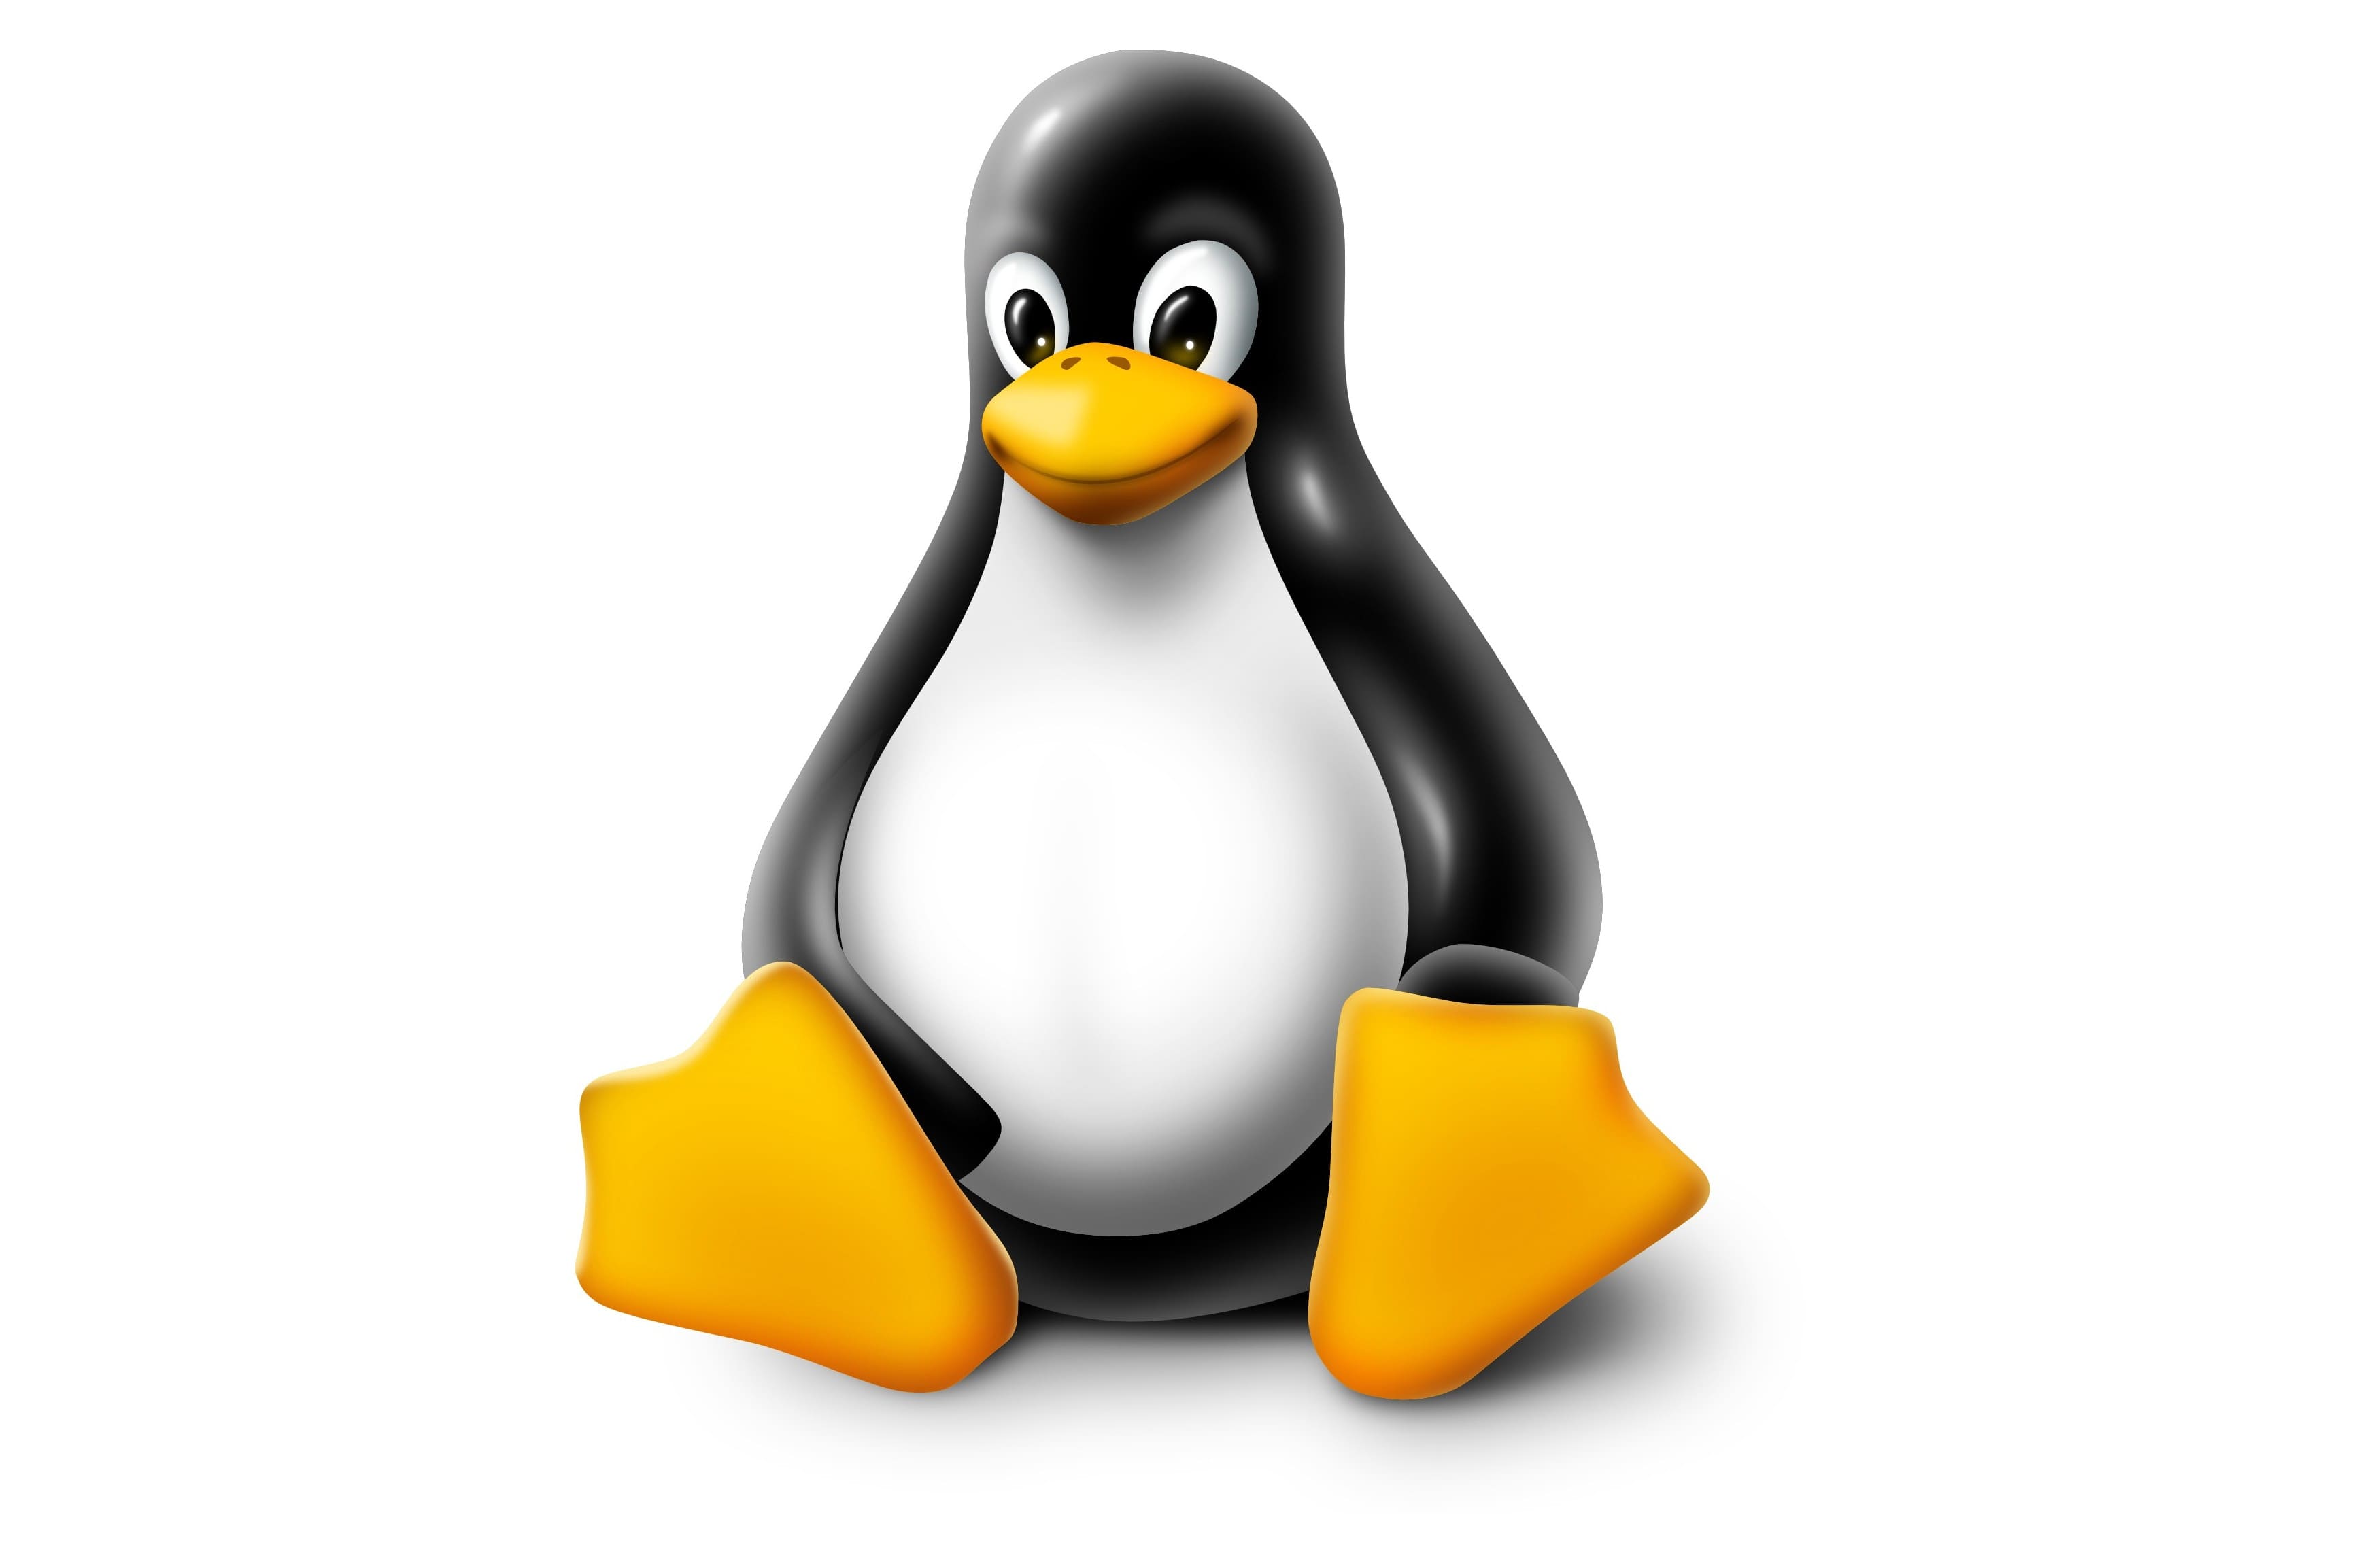 Download GNU Linux, GNU, Linux Wallpaper in 1920x1080 Resolution